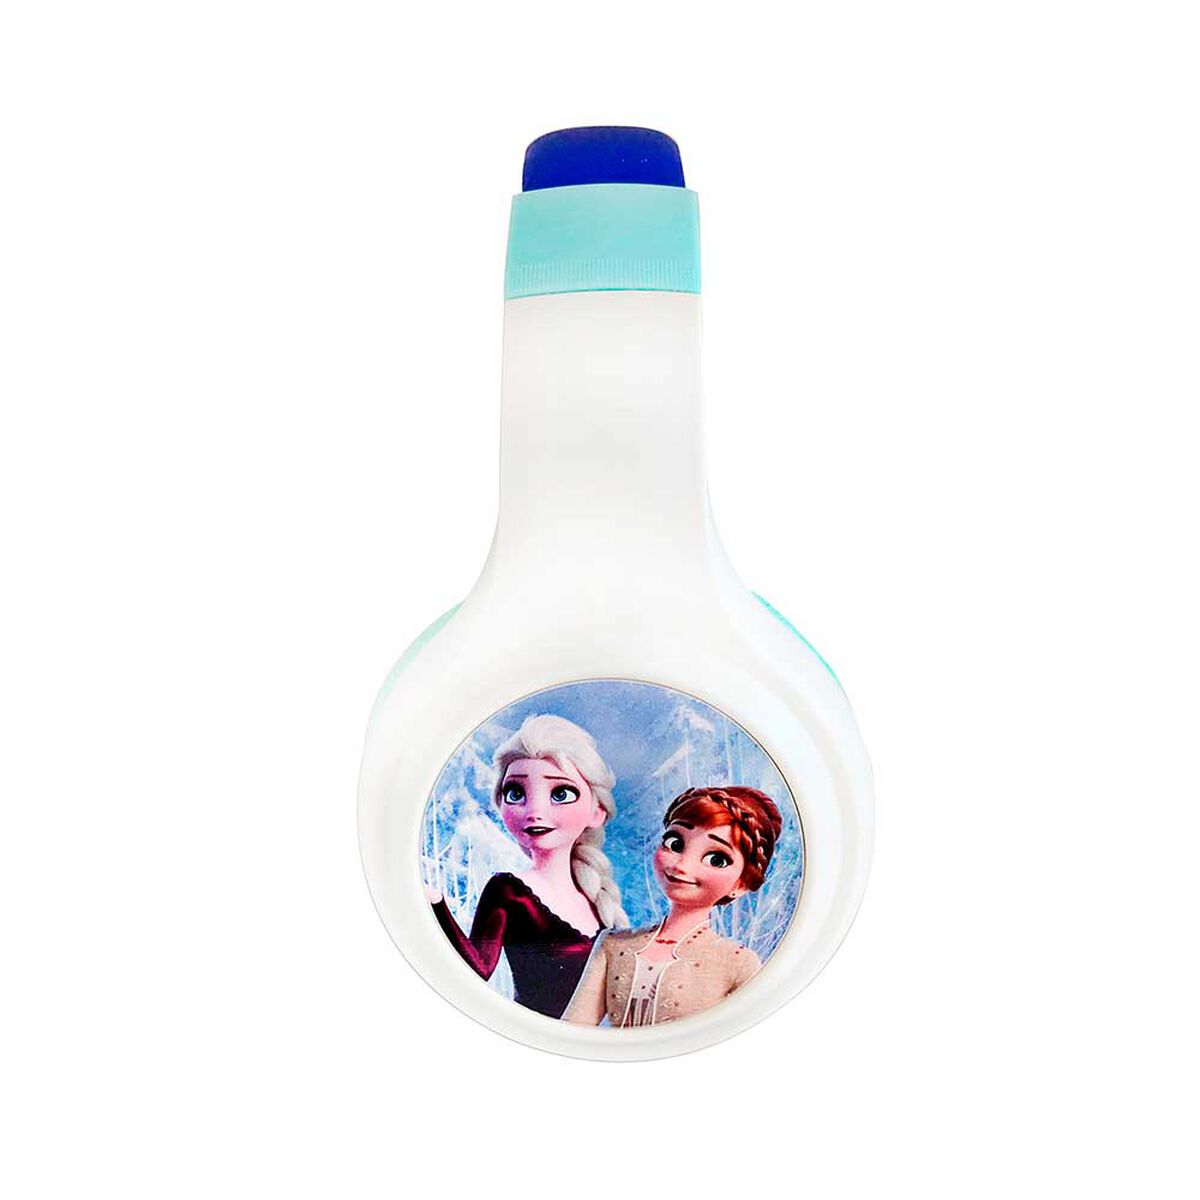 Audífonos Bluetooth Over Ear Disney Frozen Elsa y Anna Blanco Azul